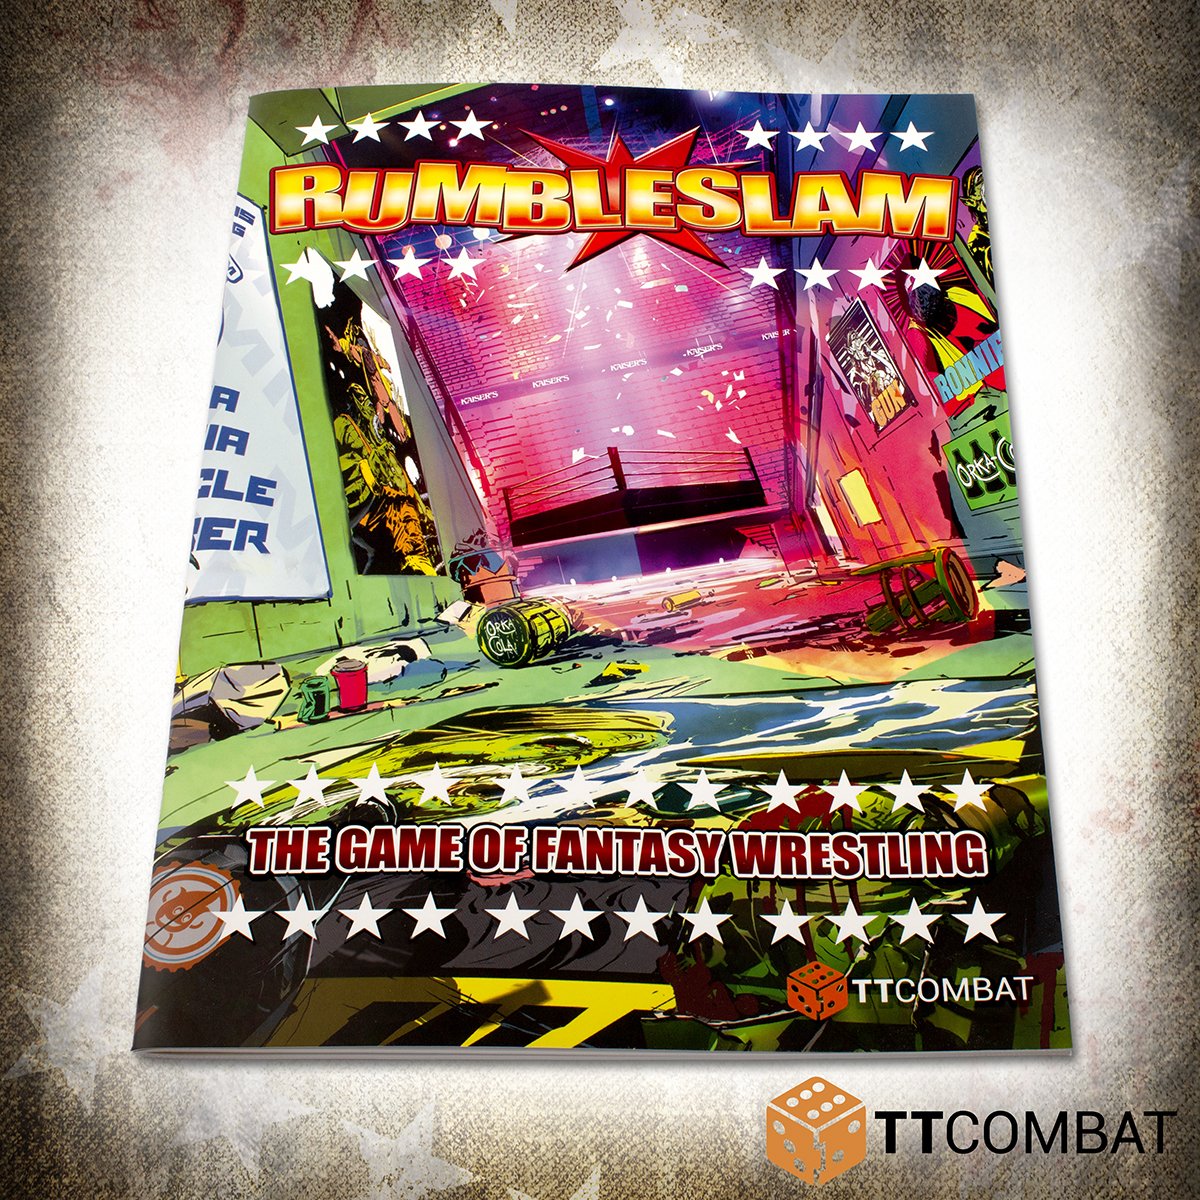 Cover of rumble slam rule book